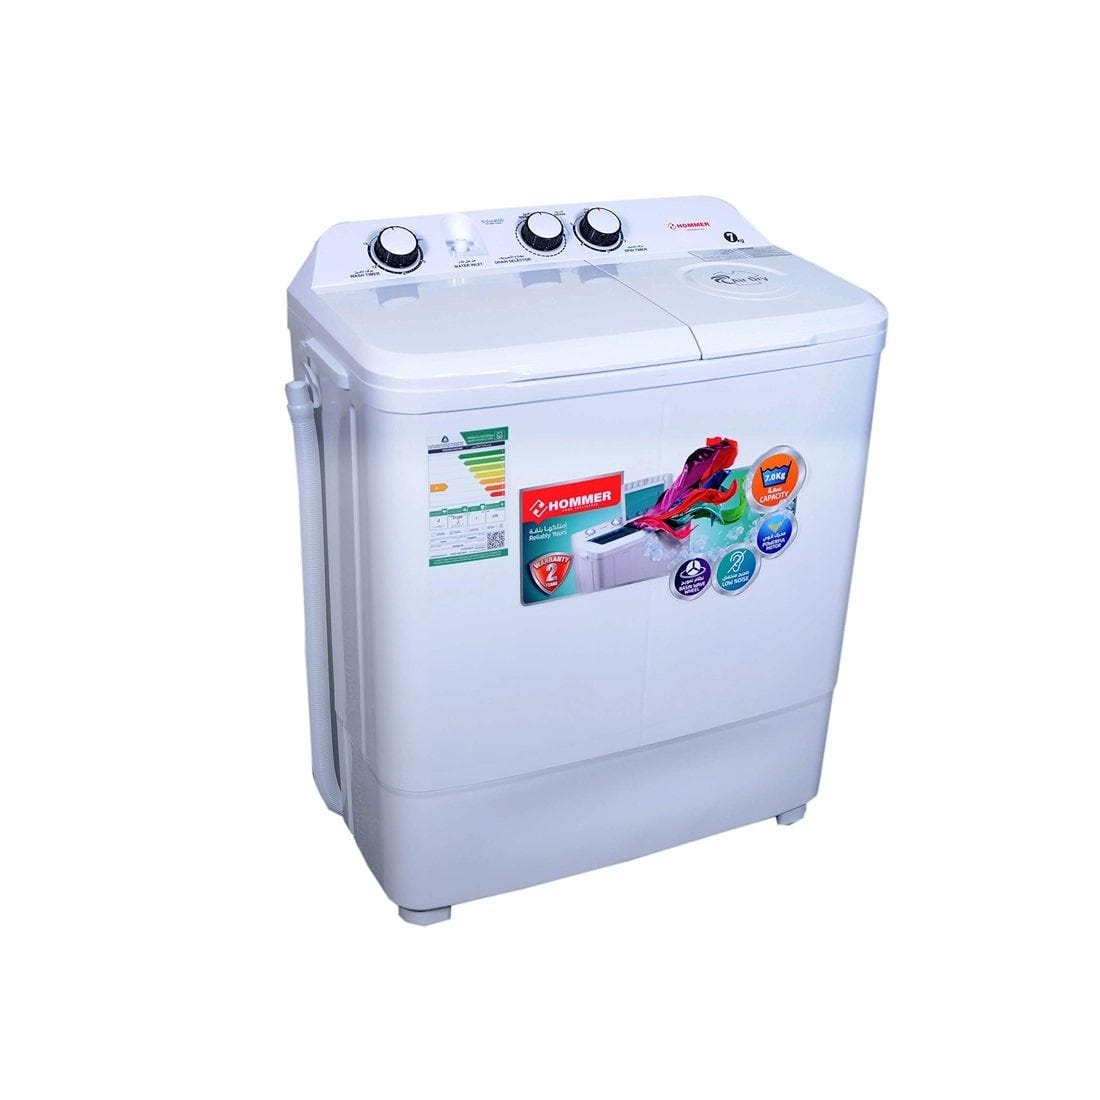 Hommer Home Washing Machine, Twin Tub, 7 Kg, White, HSA404-12